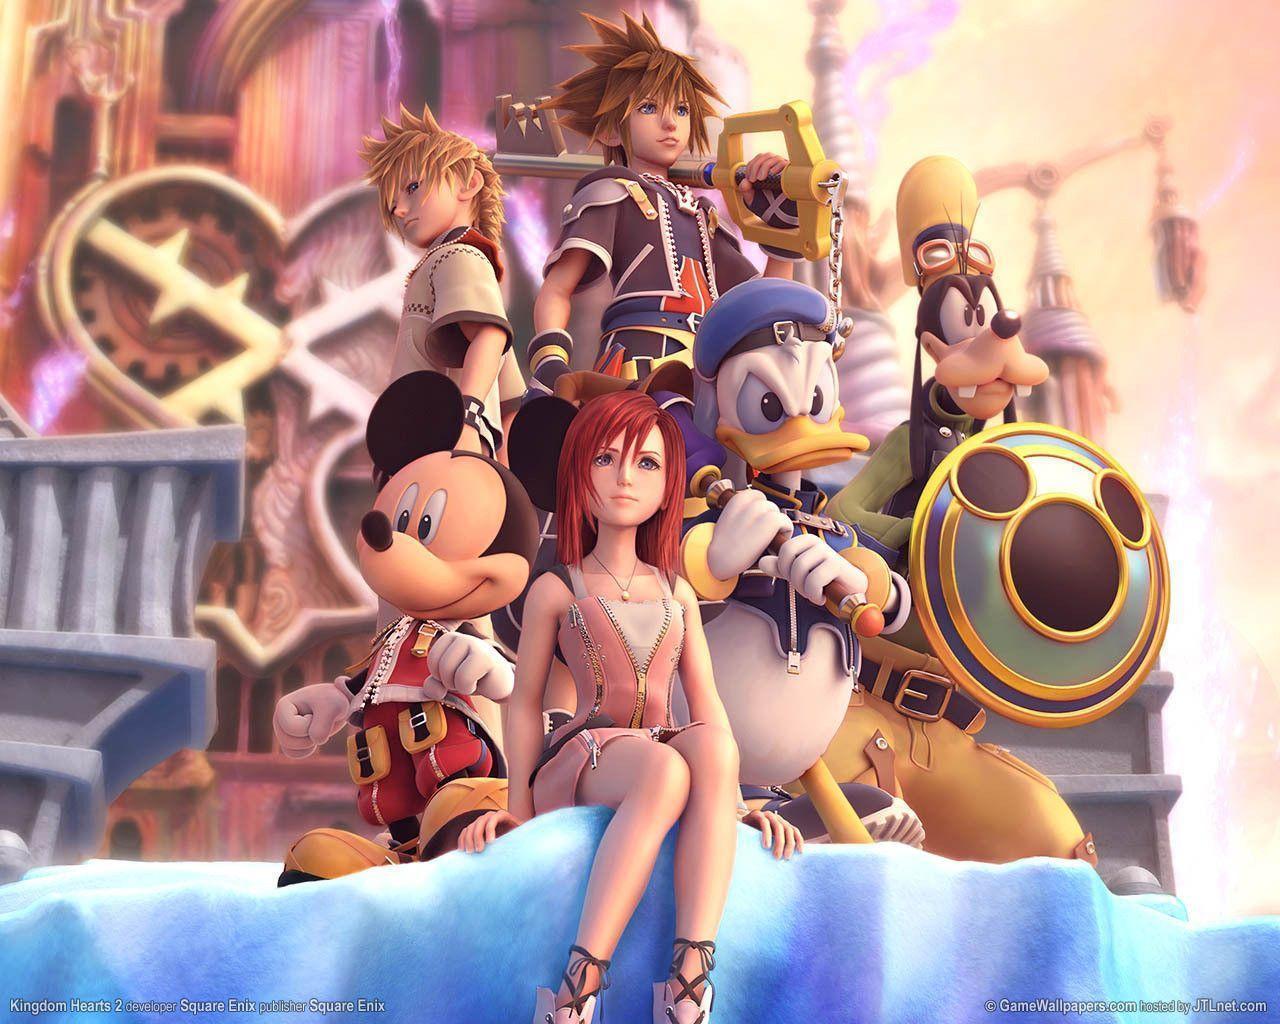 Kingdom Hearts Sonic The Hedgehog Image Kingdom Hearts Wallpaper